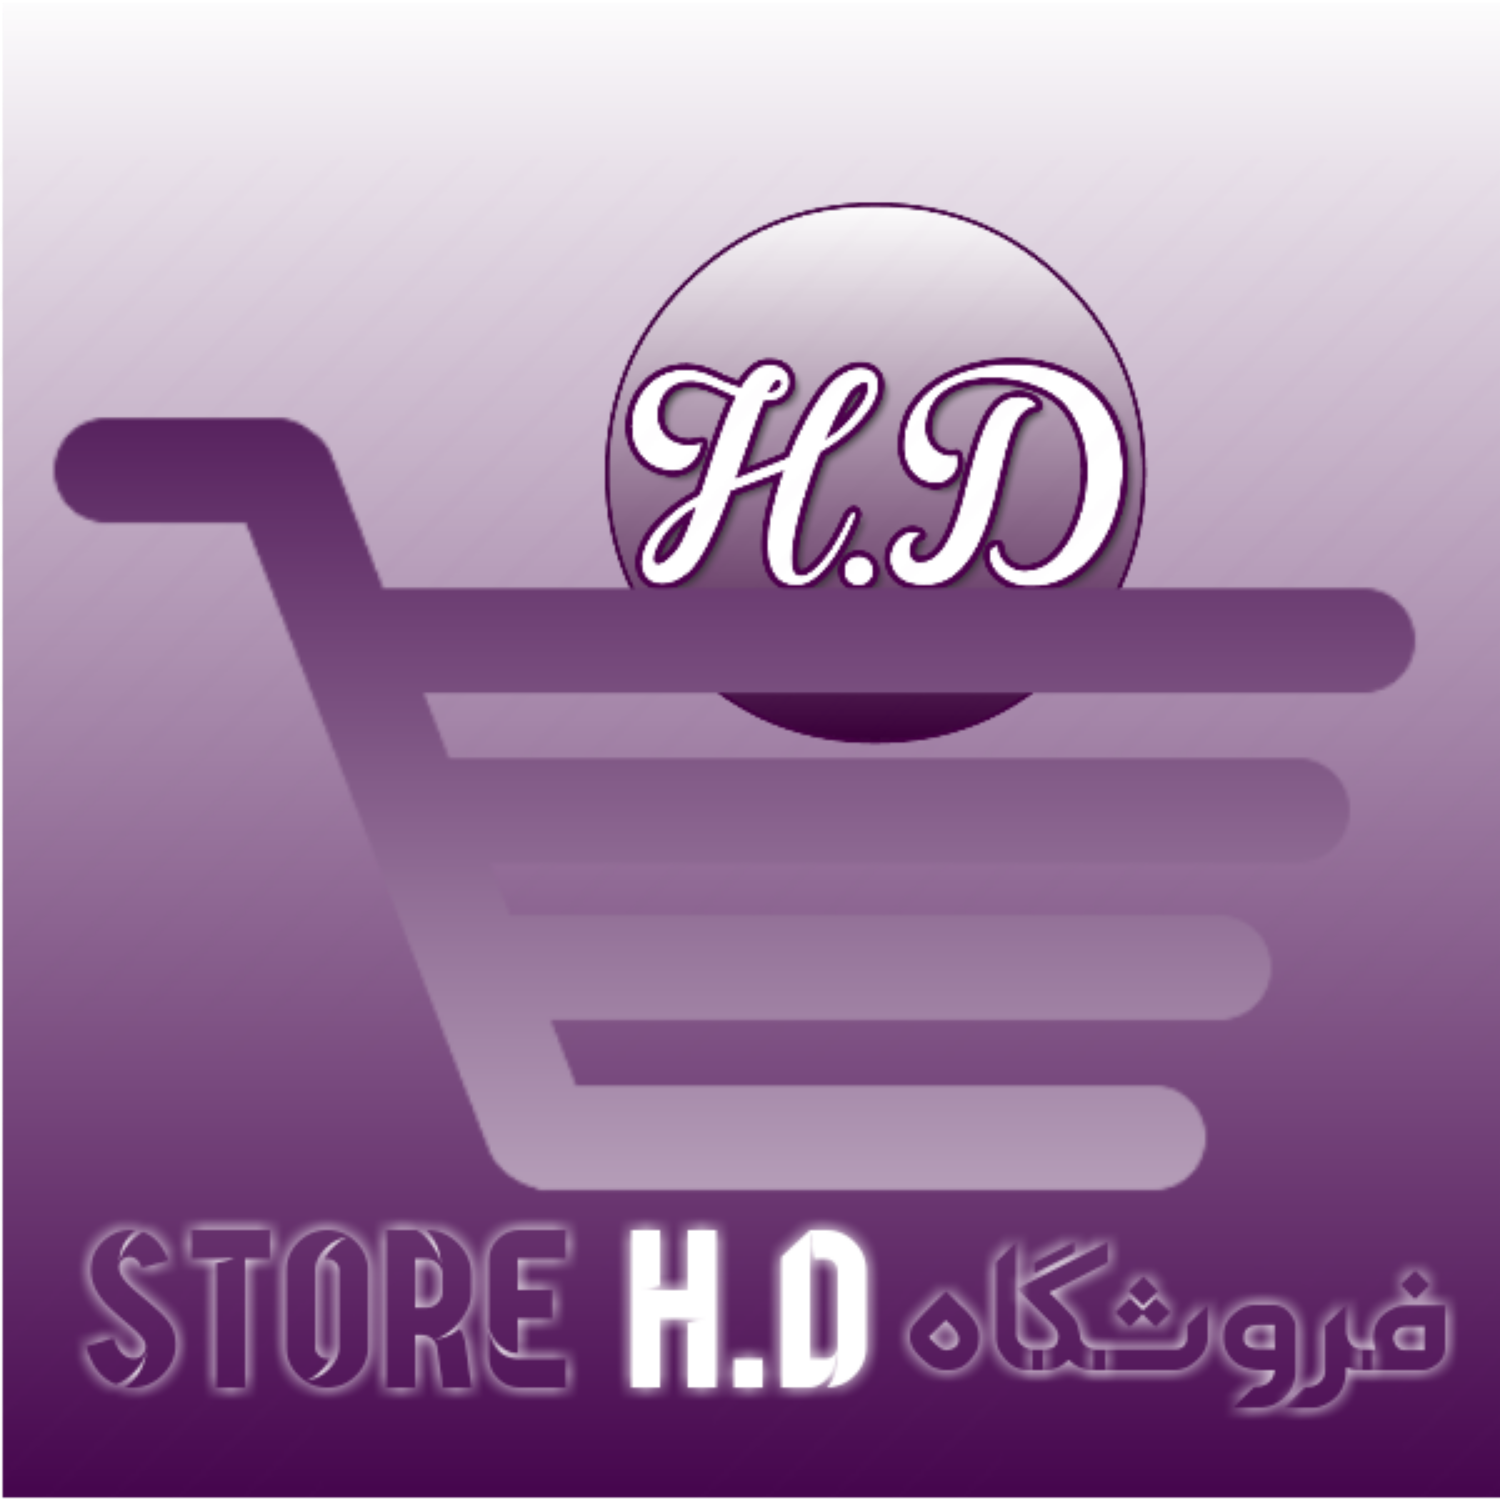 فروشگاه H.D